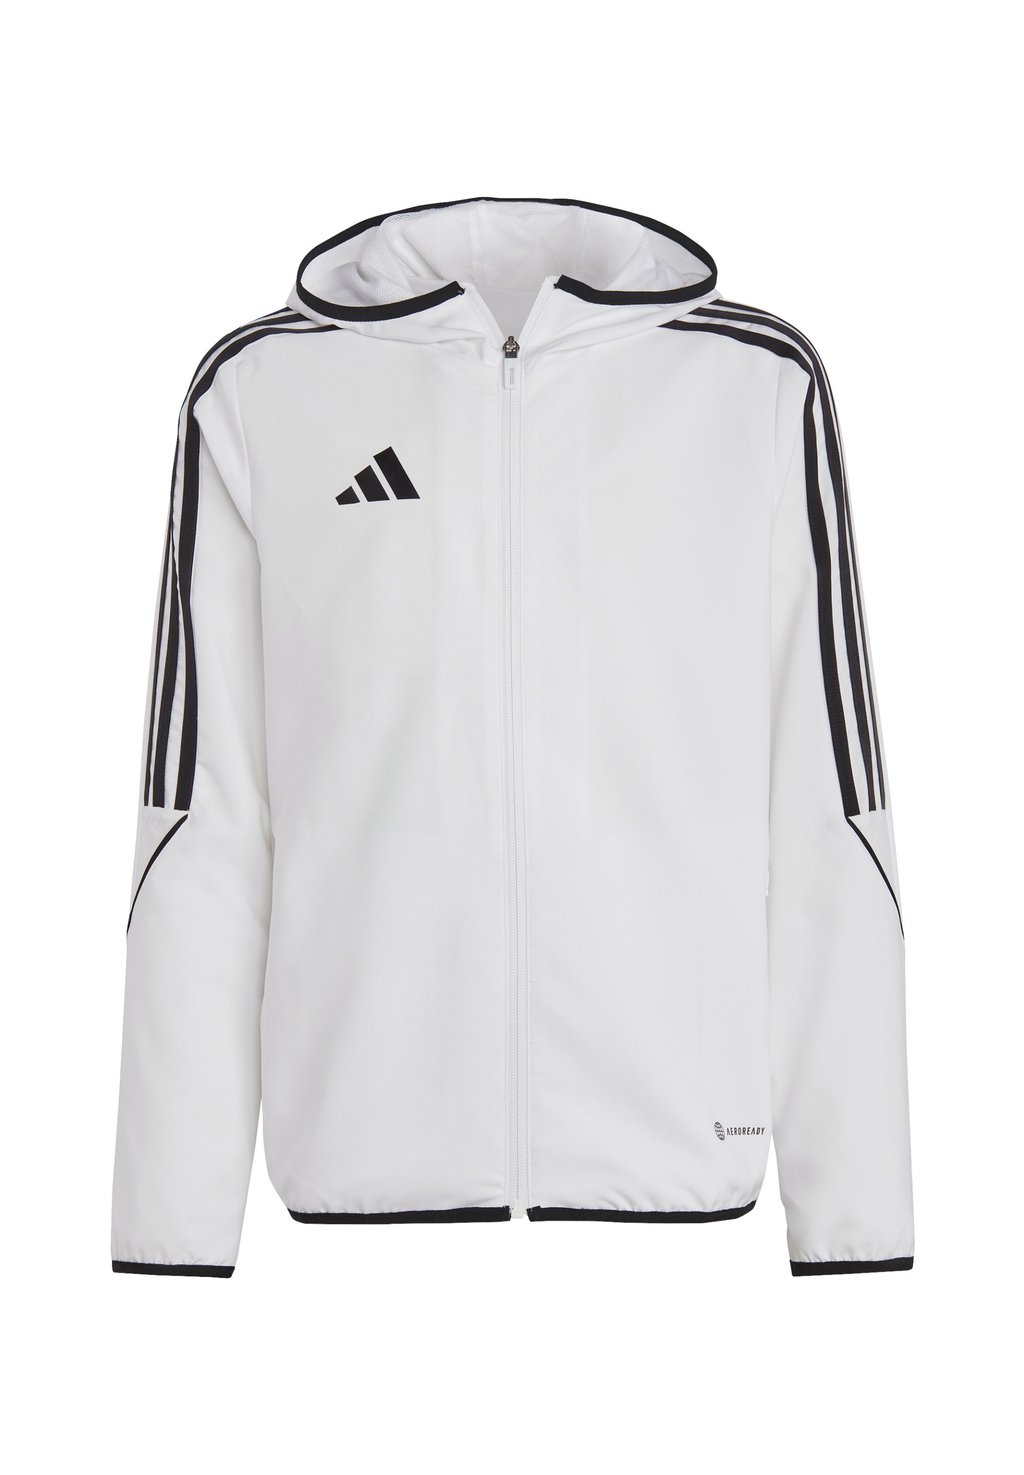 Спортивная куртка Tiro 23 League Adidas, цвет weiss спортивная куртка tiro 23 league adidas цвет gelb